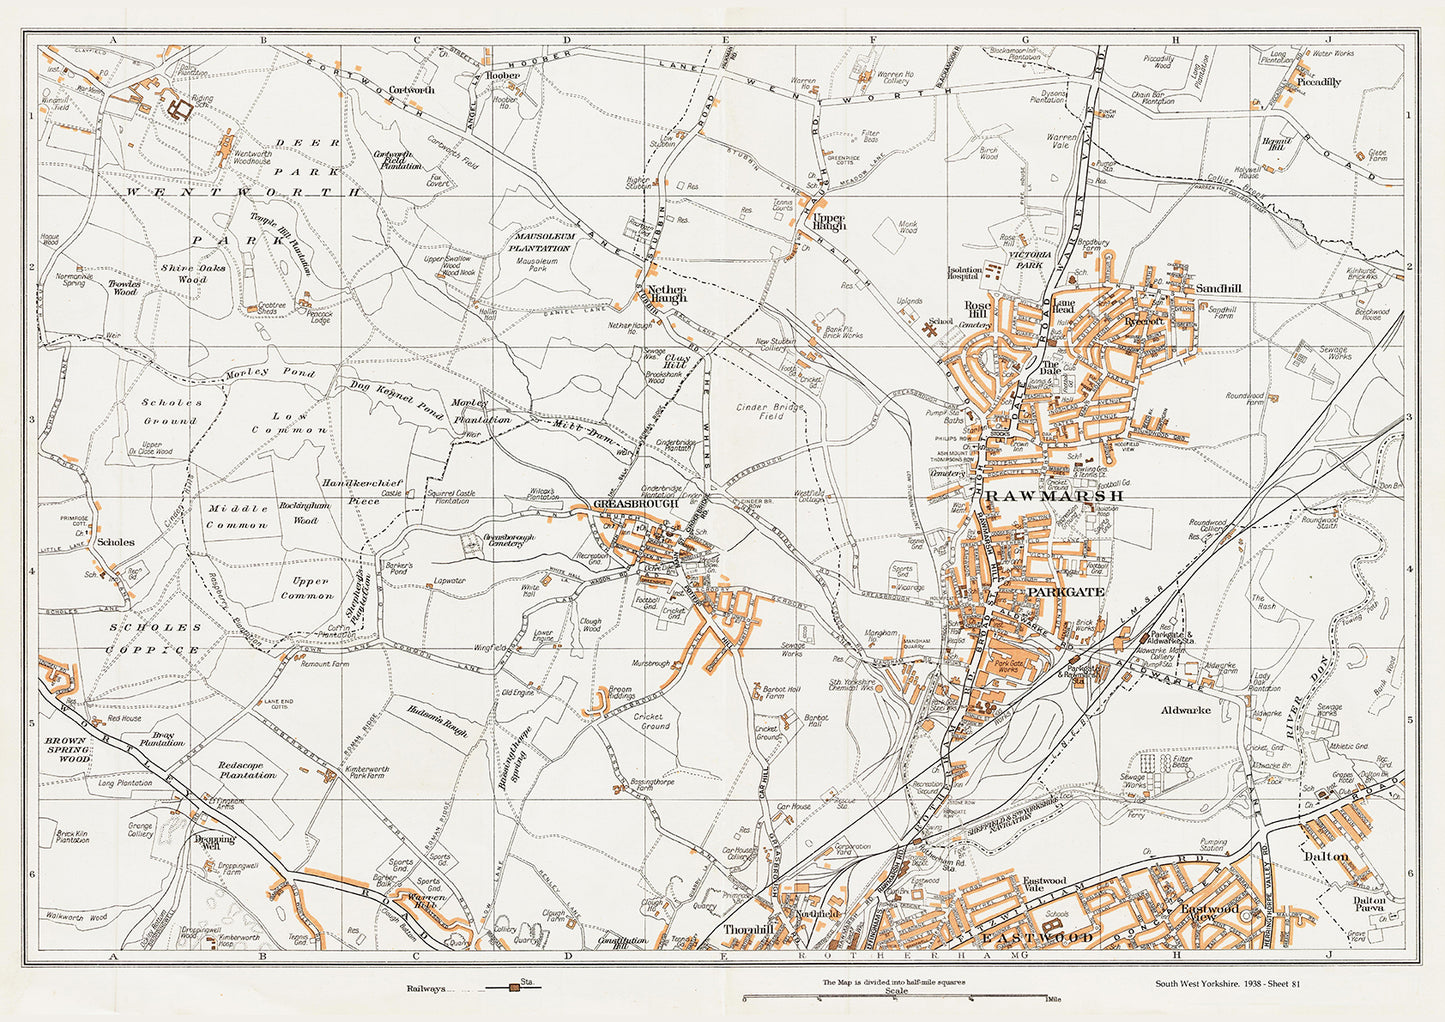 Yorkshire in 1938 Series - Rotherham (north), Rawmarsh, Nether Haugh, Greasbrough, Sandhill, Parkgate and Dalton area - YK-81